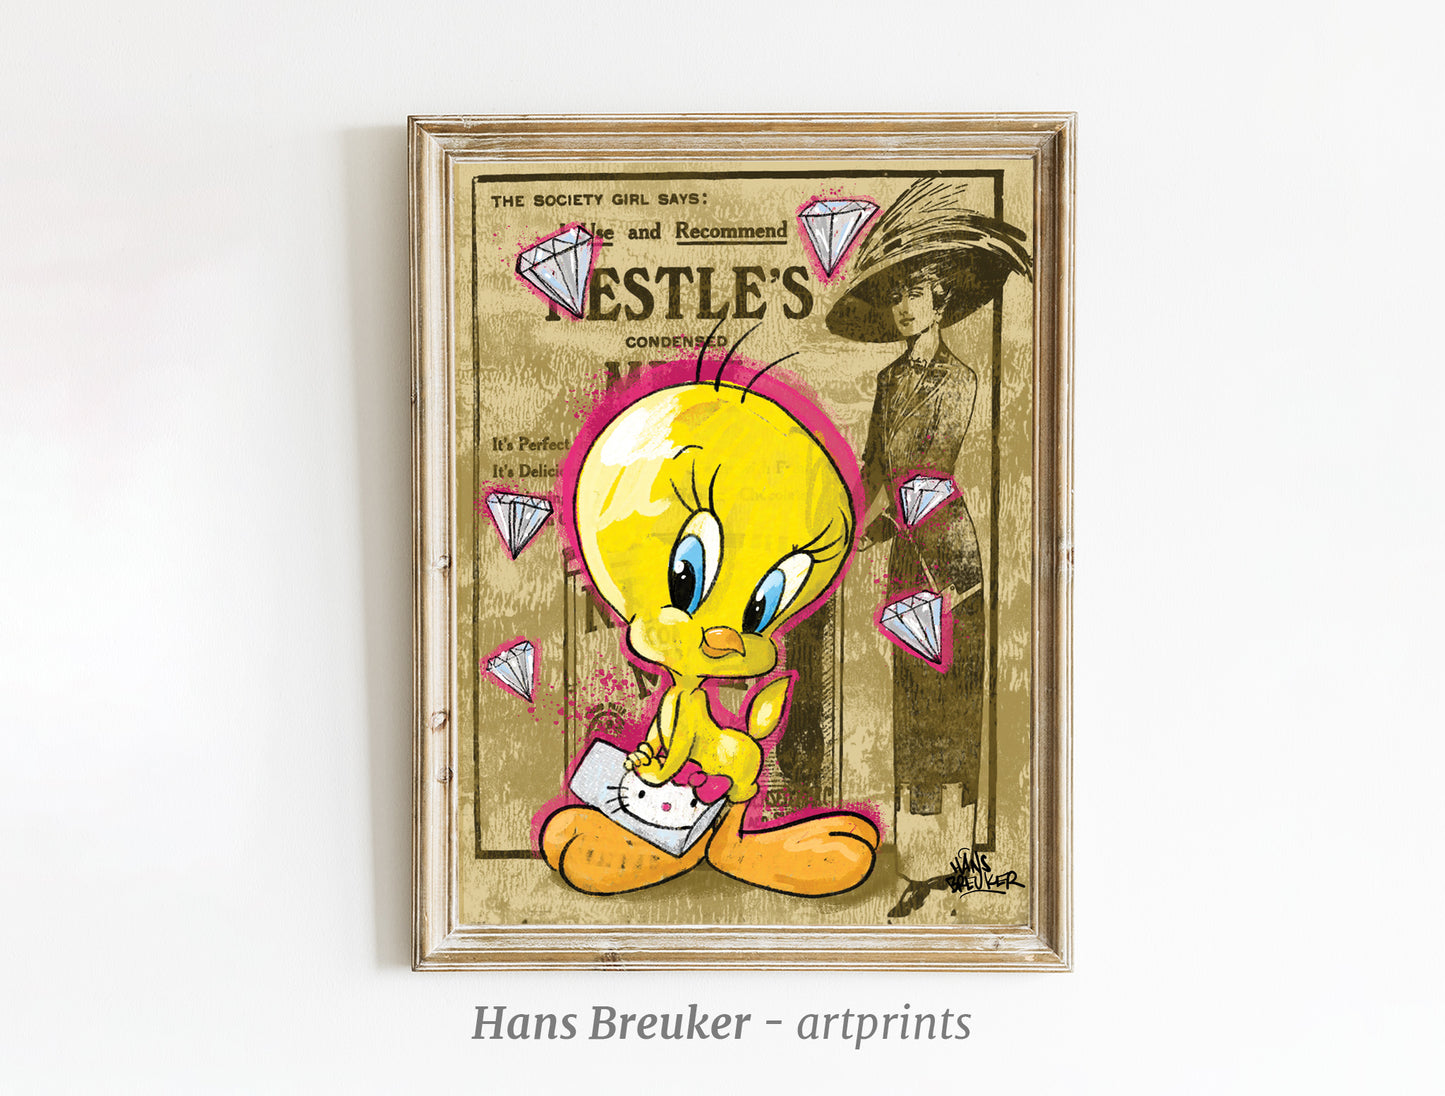 A birds best friend. Tweety art. Pop art. Cartoon. Poster print. Diamond. Tweety bird. Graffiti. Hans Breuker. looney tunes. old advertising